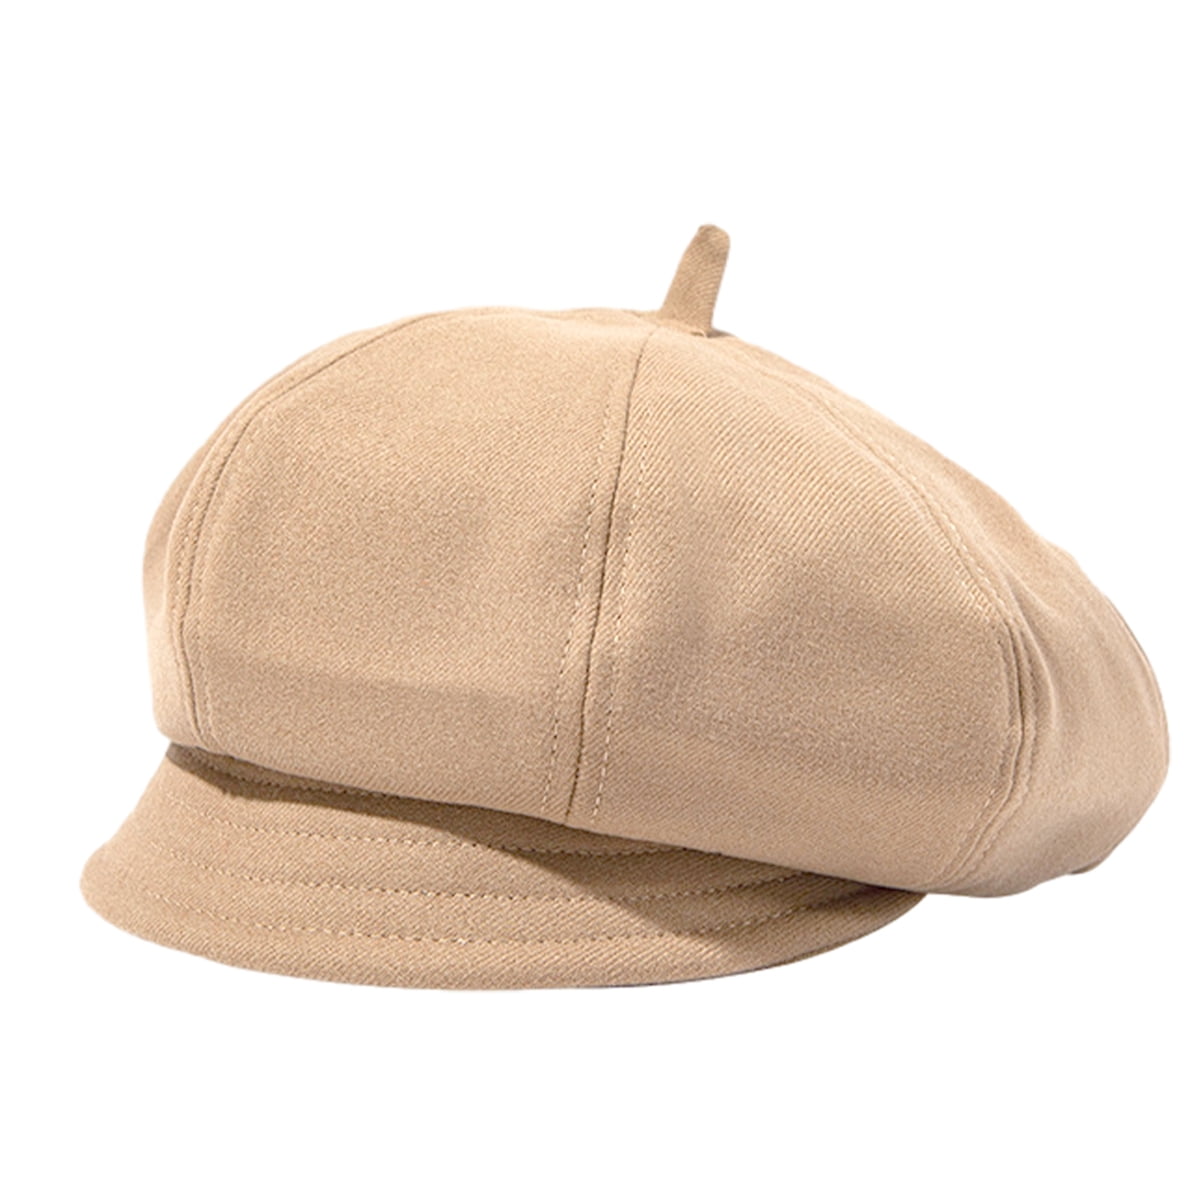 Womens Newsboy Cap Winter Hats Baker Boy Hats Adjustable for